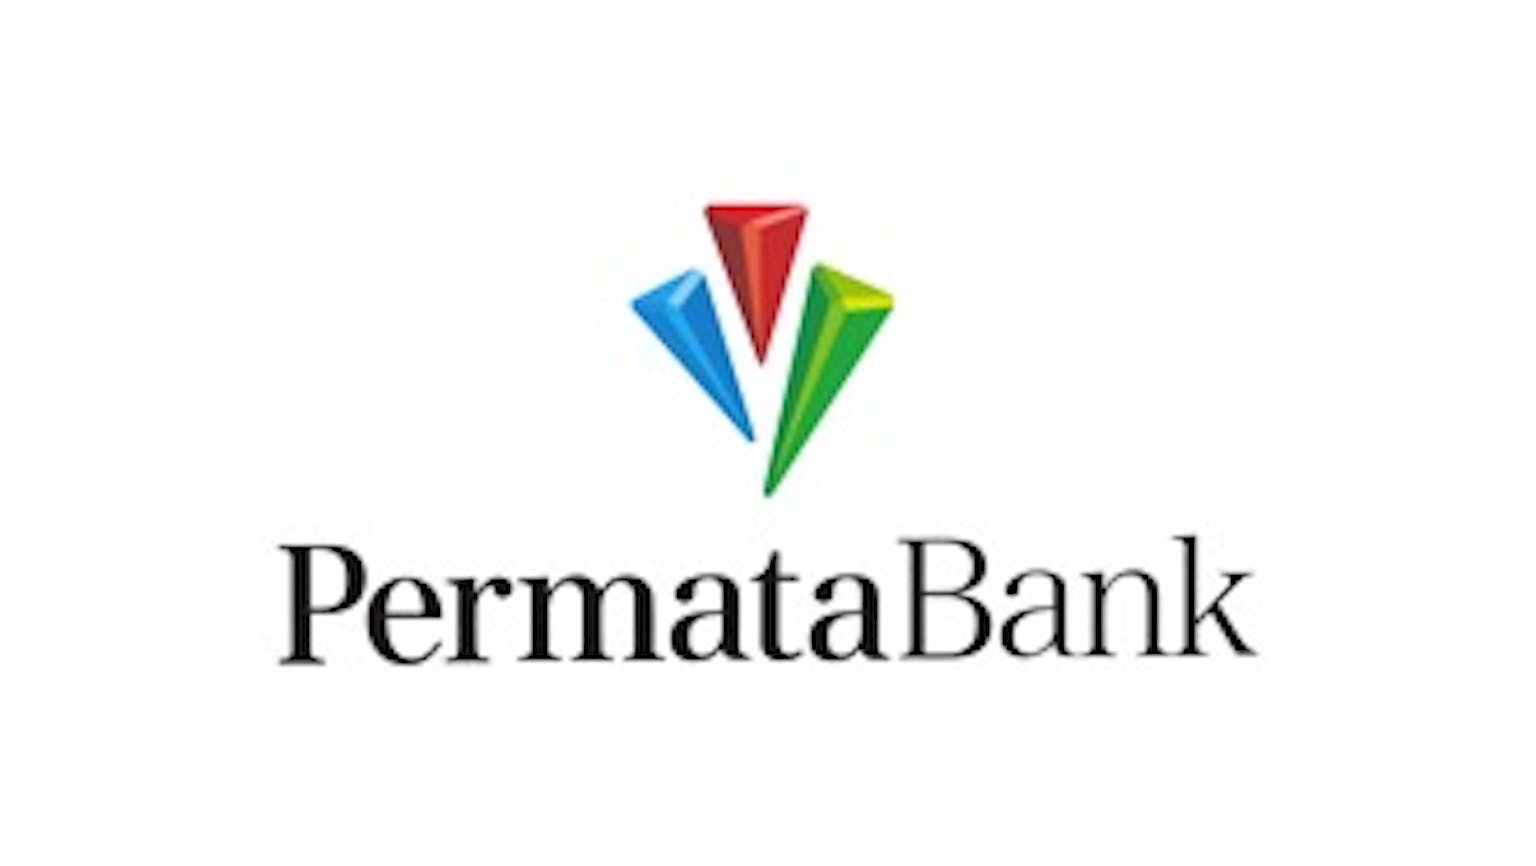 PermataShopping Card Mastercard Platinum